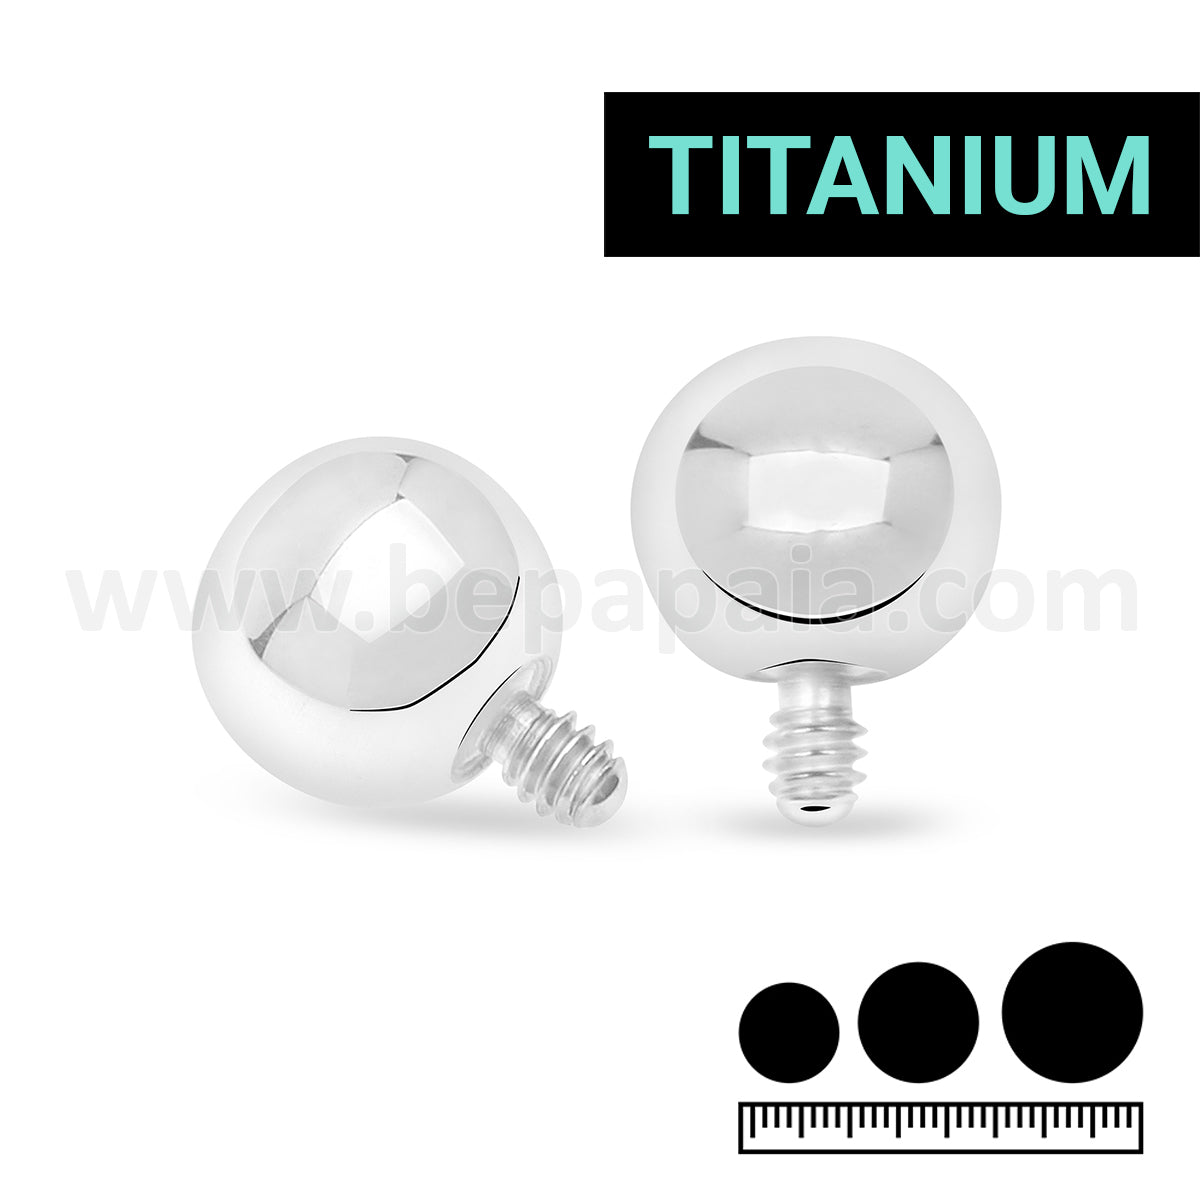 Titanium G23 ball